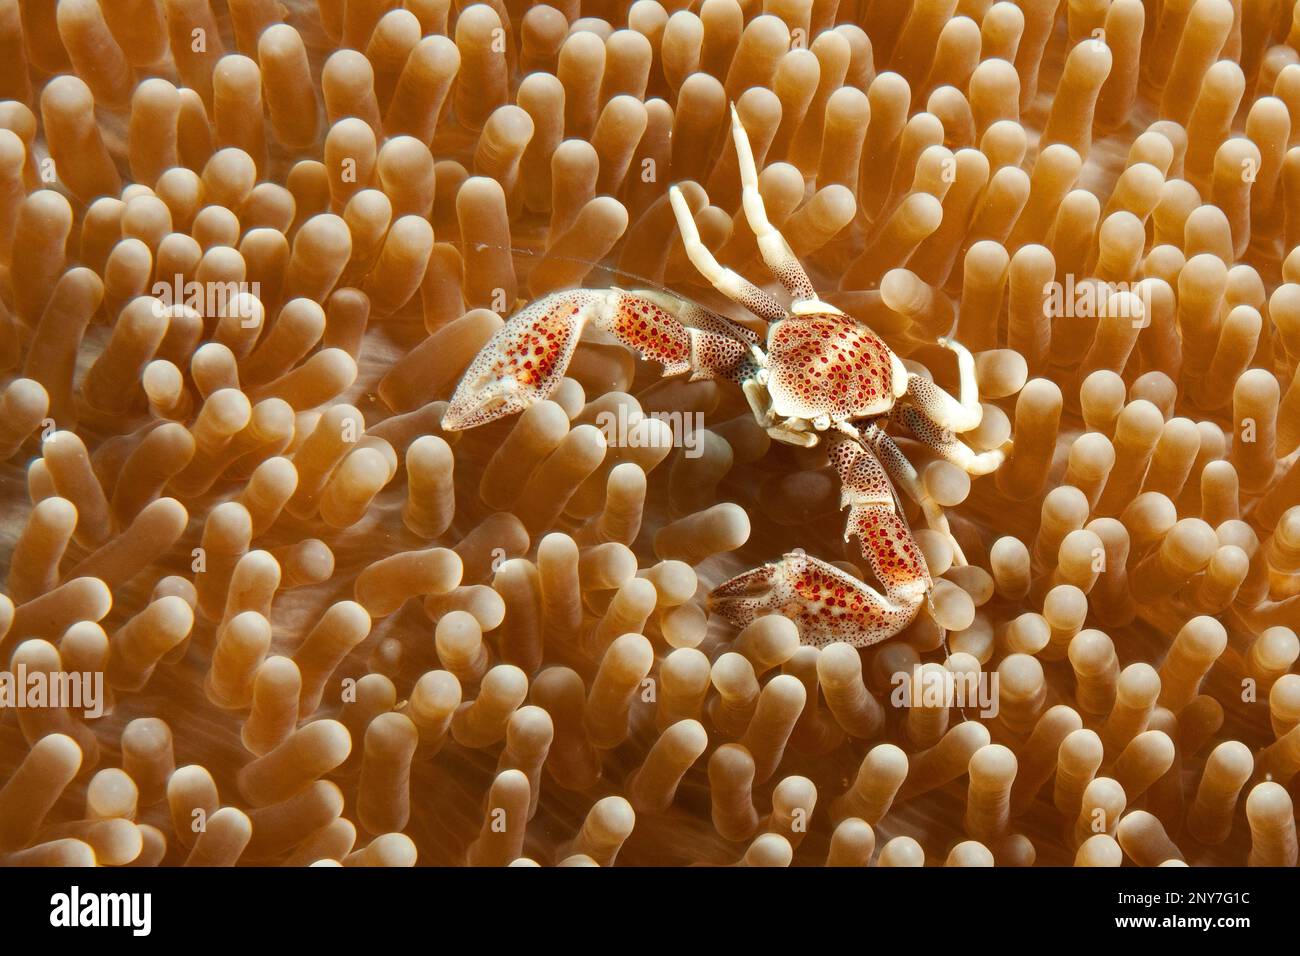 Spotted anemone crab, Spotted anemone crab, spotted porcelain crab (Neopetrolisthes maculatus), Indo-Pacific Stock Photo